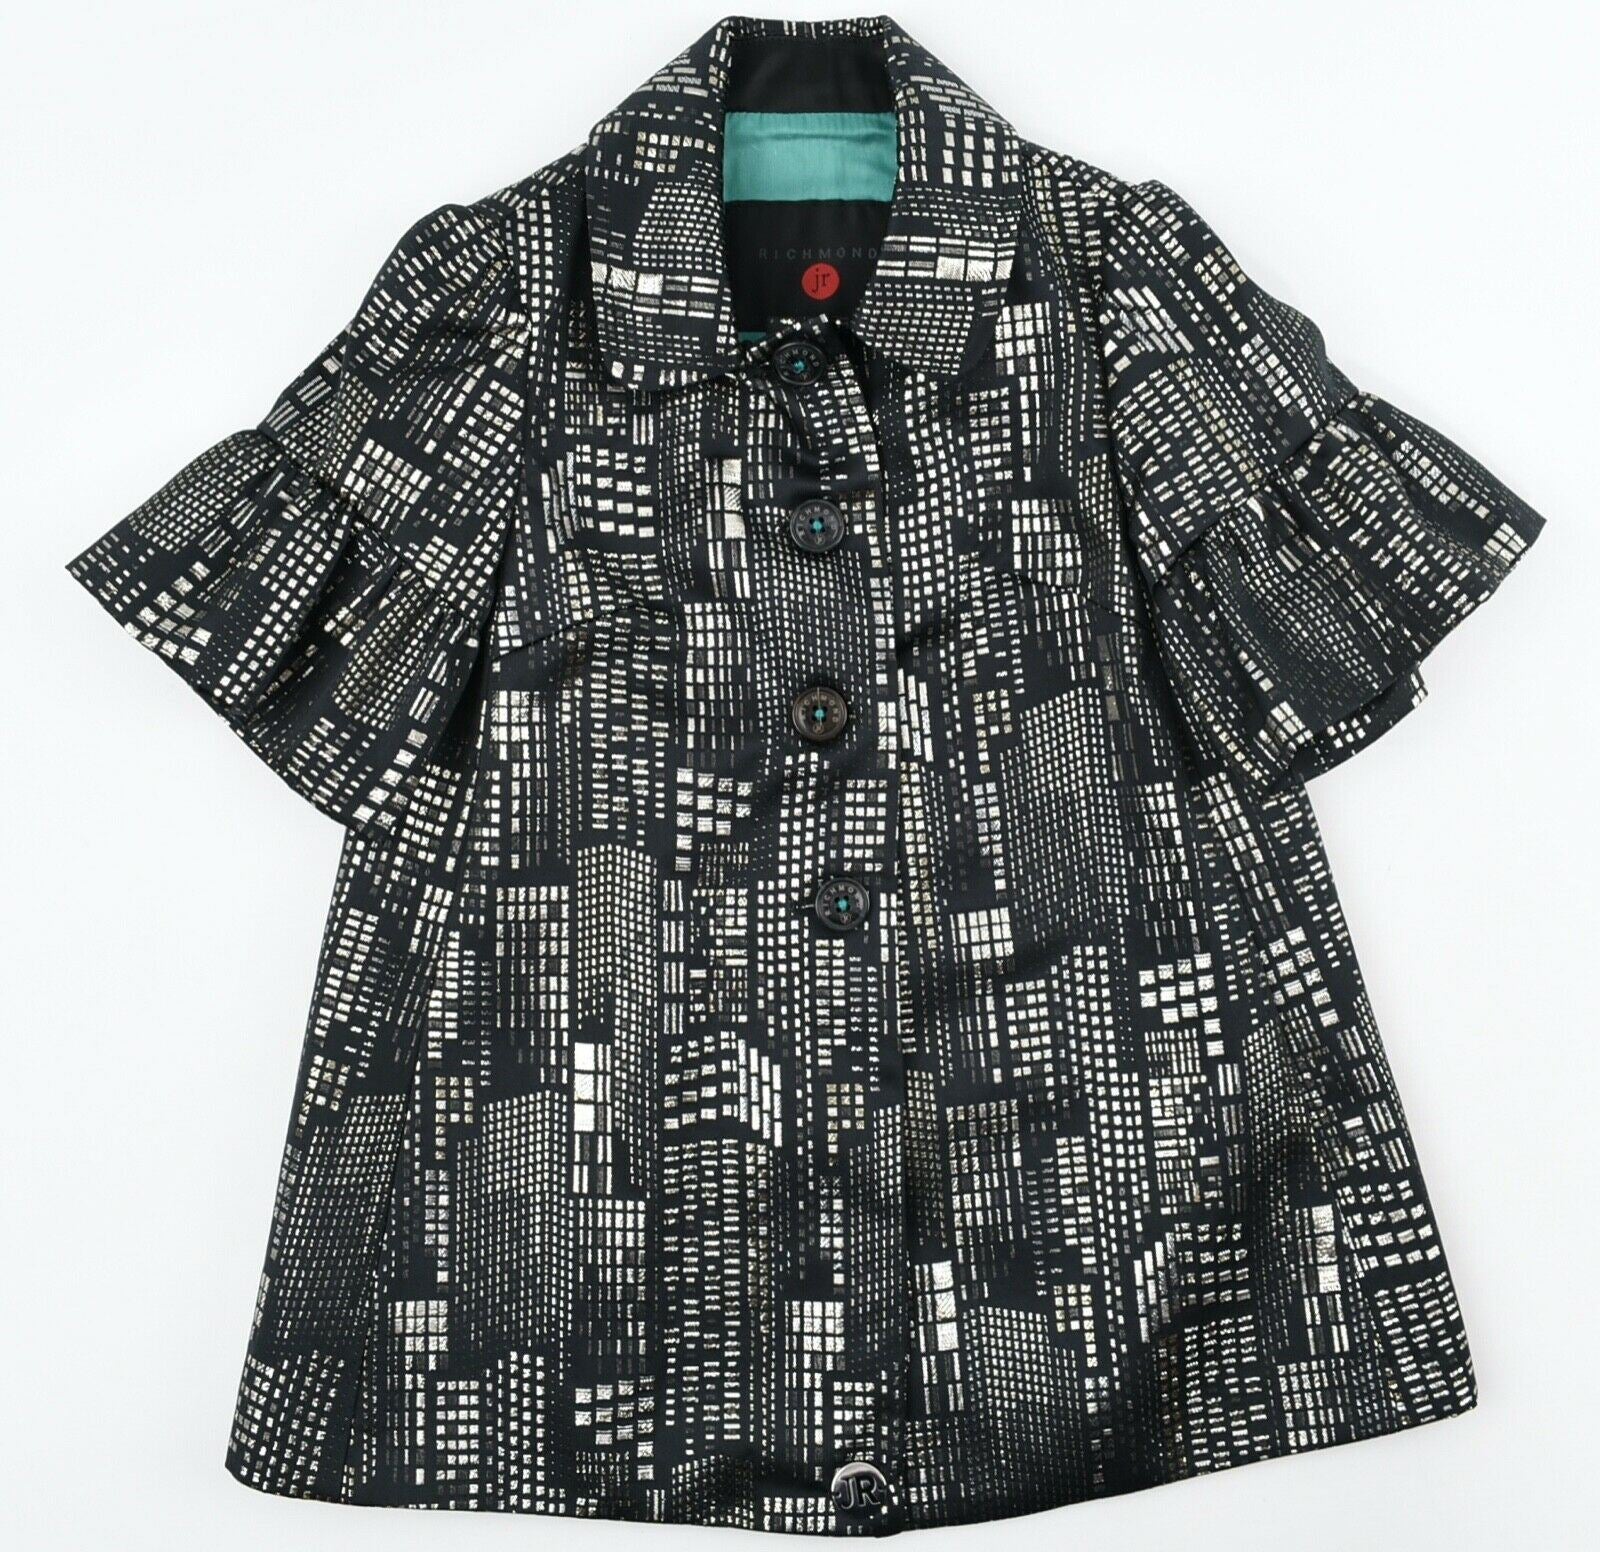 RICHMOND JUNIOR Girls' Short Sleeve Jacket, Black/Metallic, size 6 years